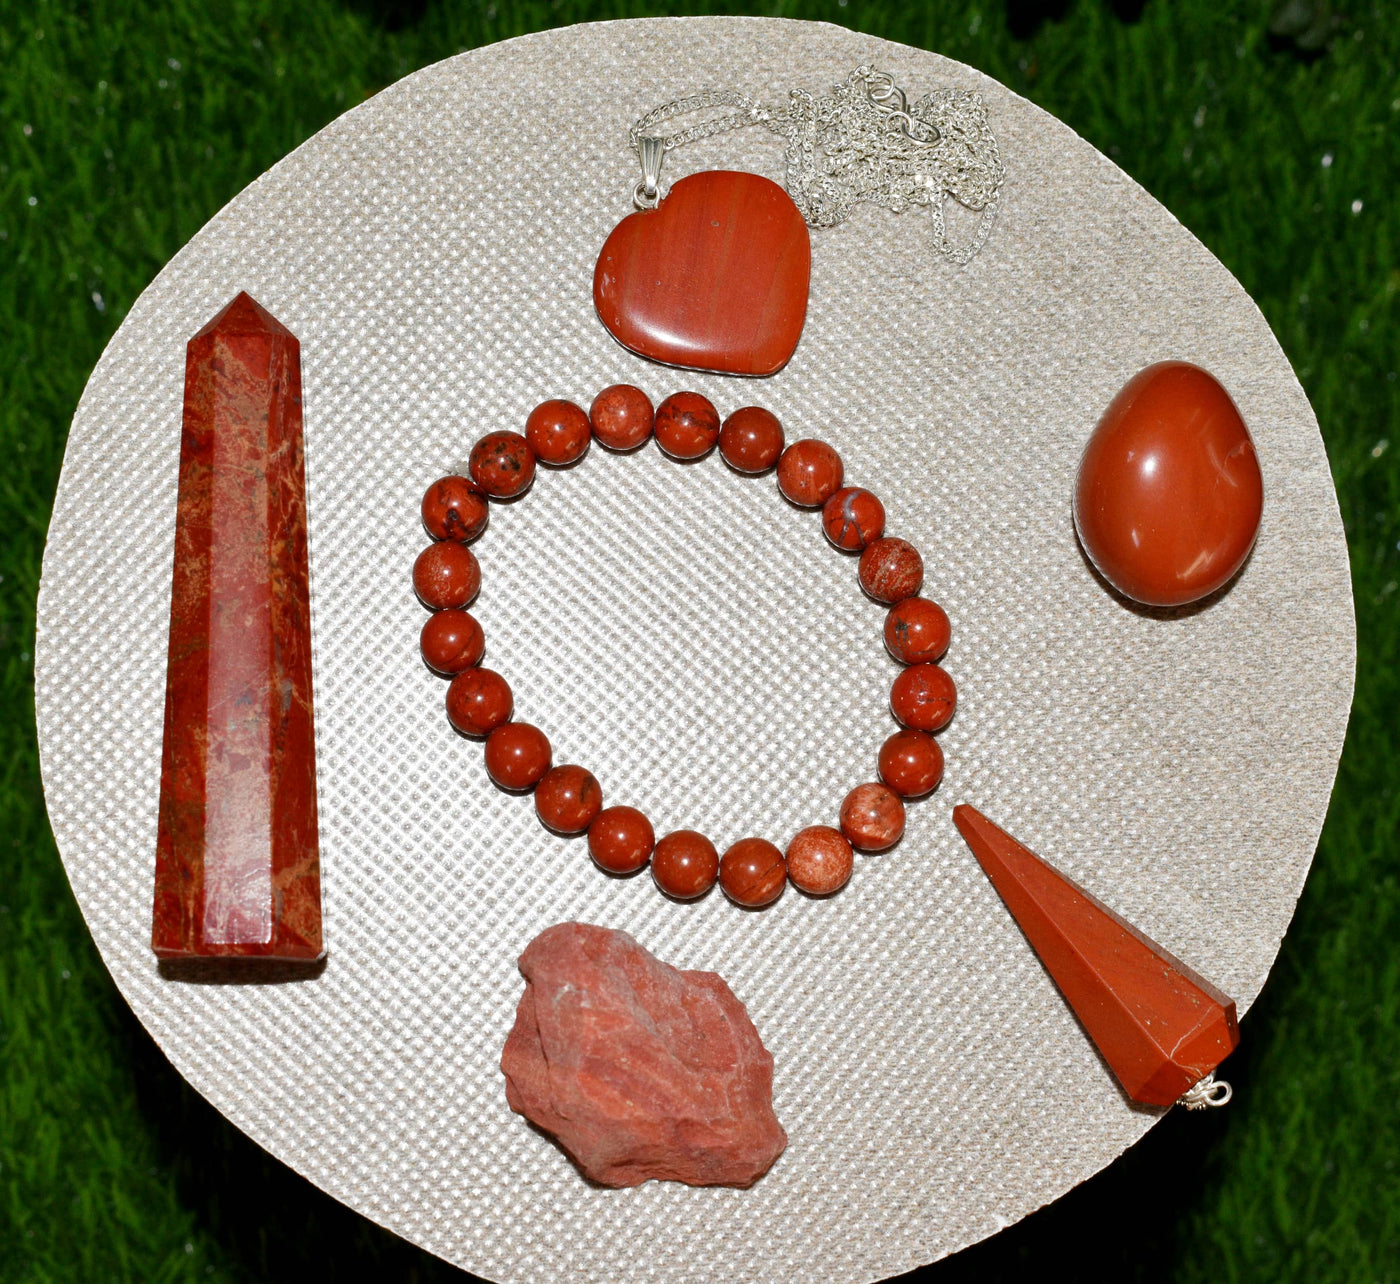 Red Jasper Crystal Gift Set For Emotional Support and Protection, Real Polished Gemstones.